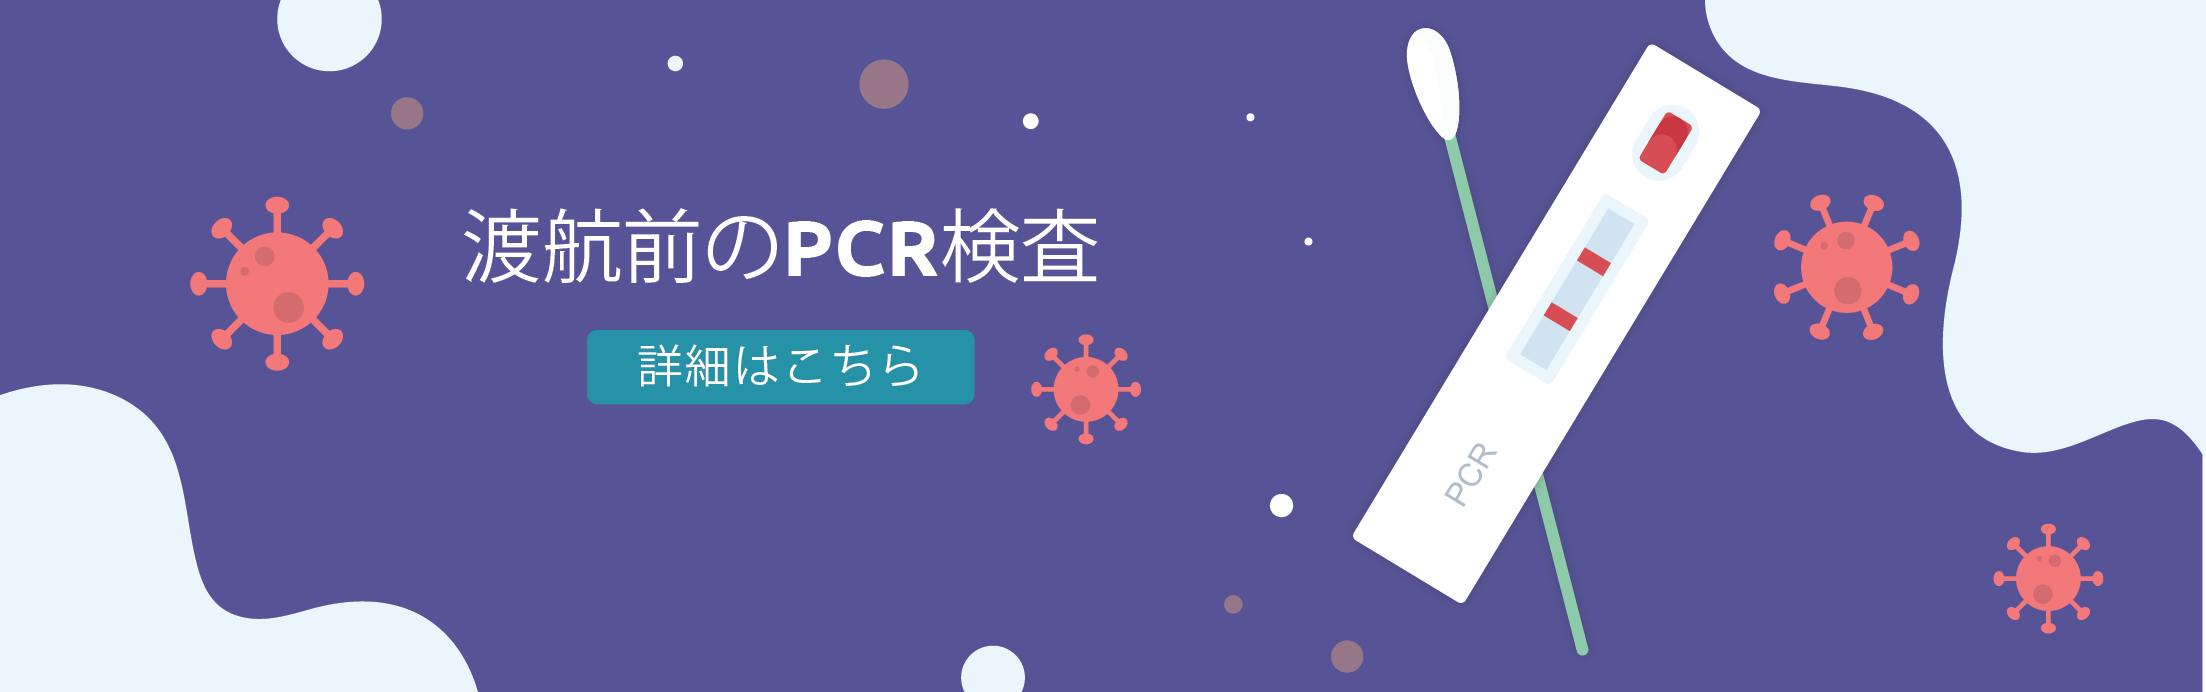 PCR banner